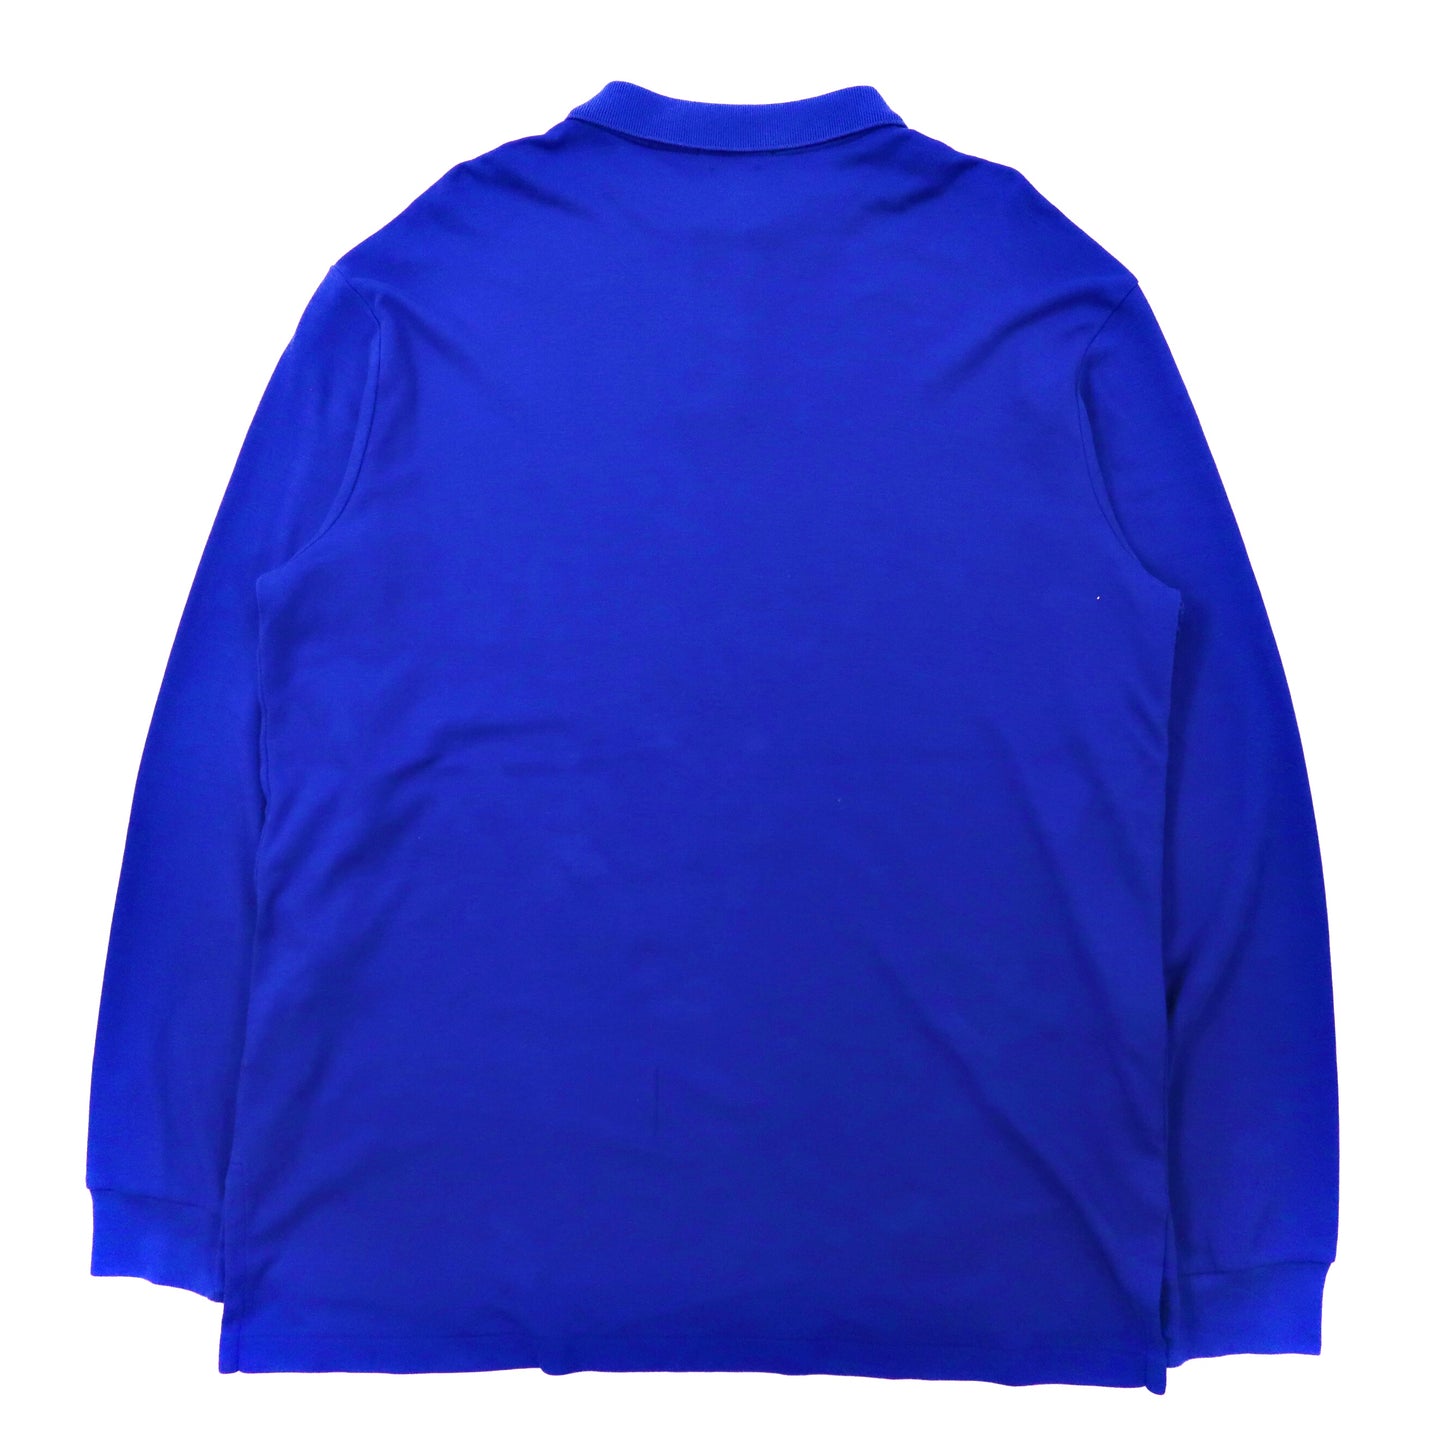 POLO RALPH LAUREN ビッグサイズ 長袖ポロシャツ XL ブルー コットン CUSTOM FIT スモールポニー刺繍